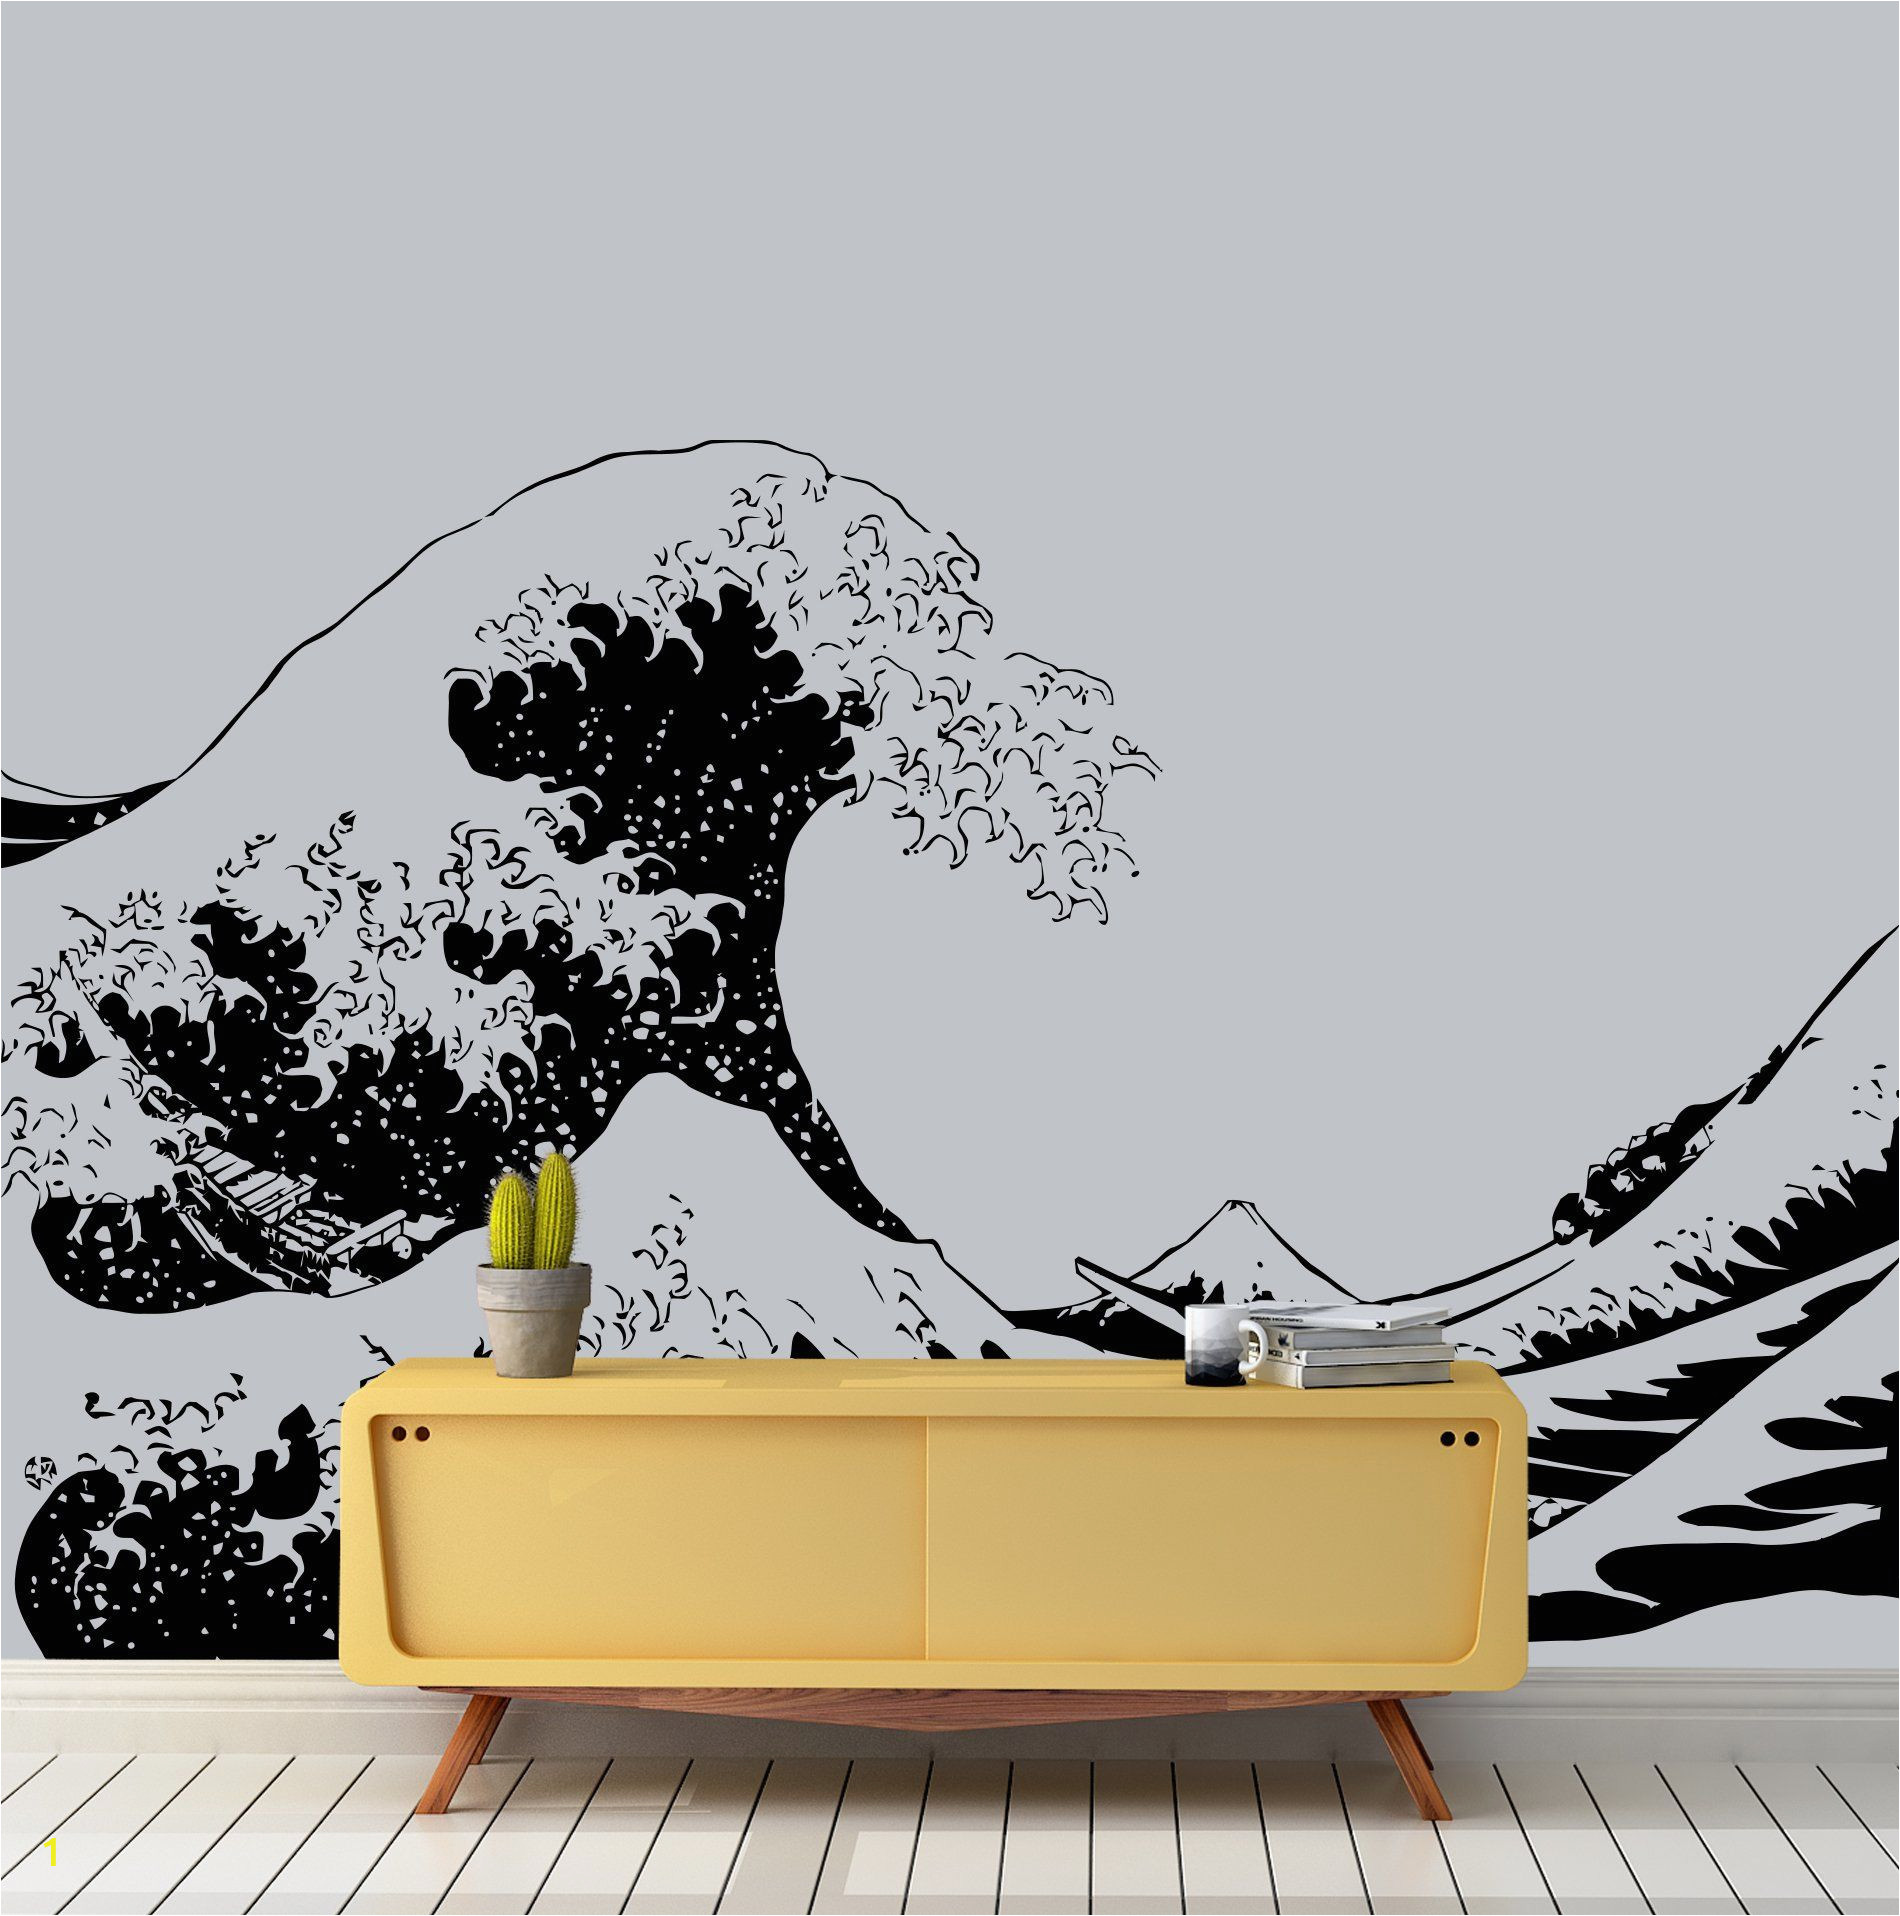 The Great Wave Off Kanagawa Wall Mural Japanese the Great Wave F Kanagawa by Hokusai Wall Decal